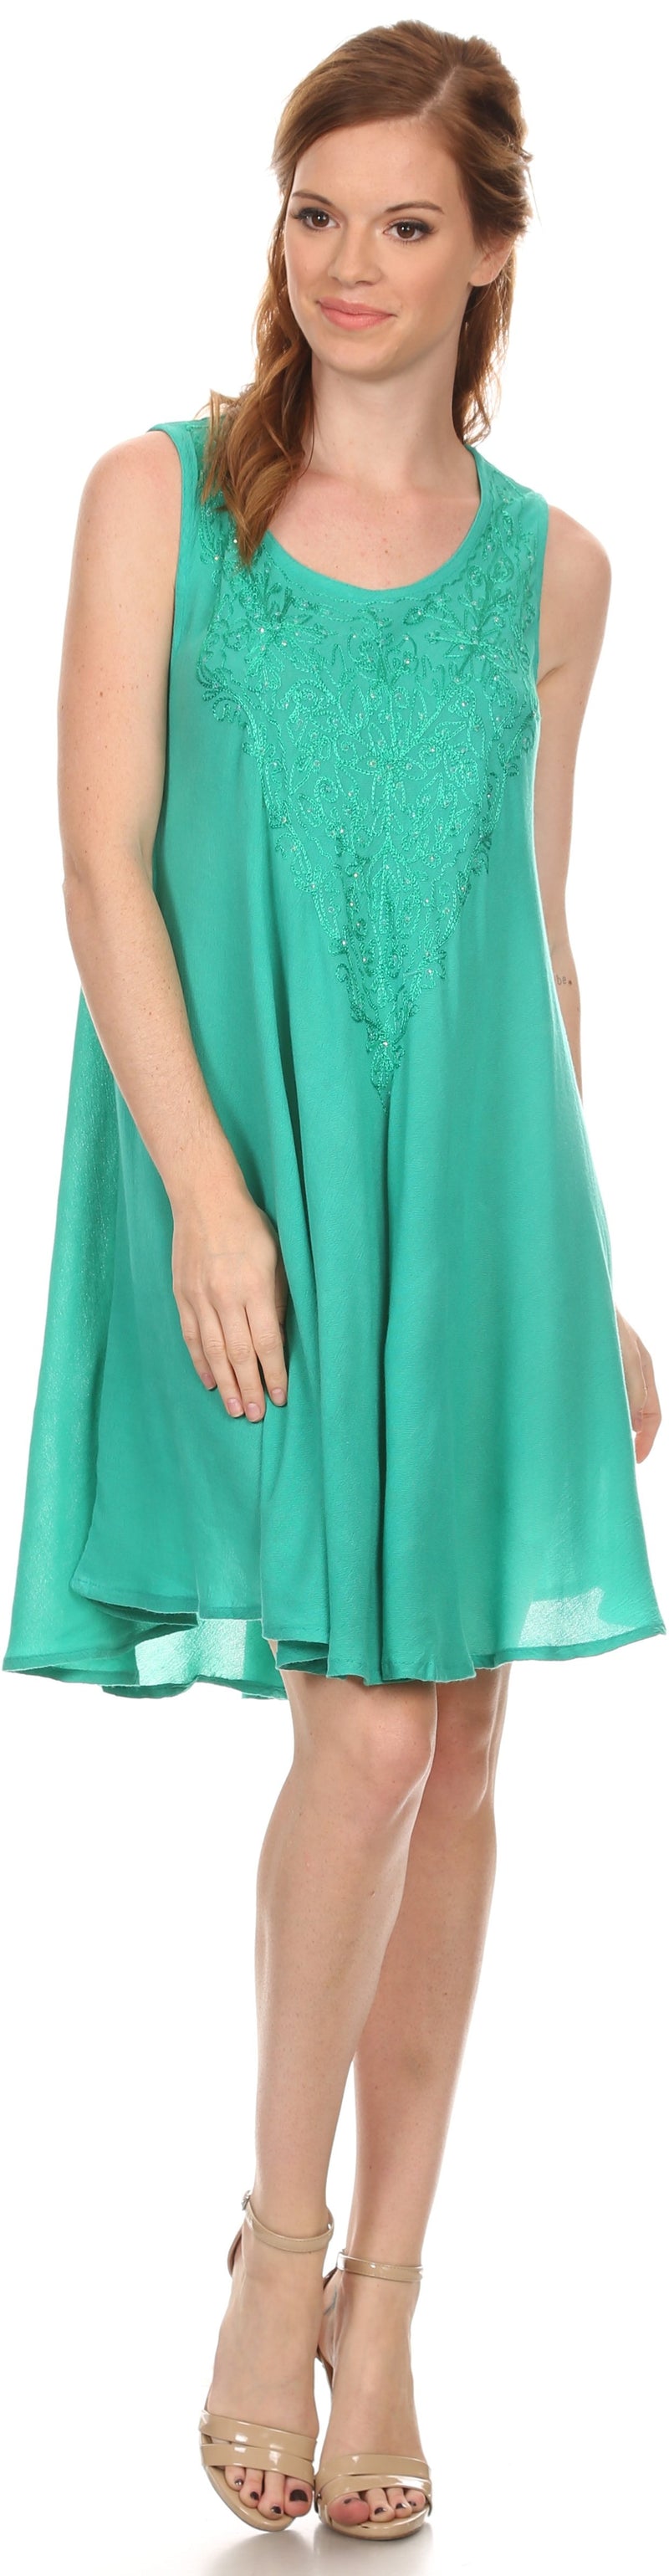 Sakkas Alechia Mid Length Tank Top Sleeveless Embroidered Caftan Dress / Cover Up